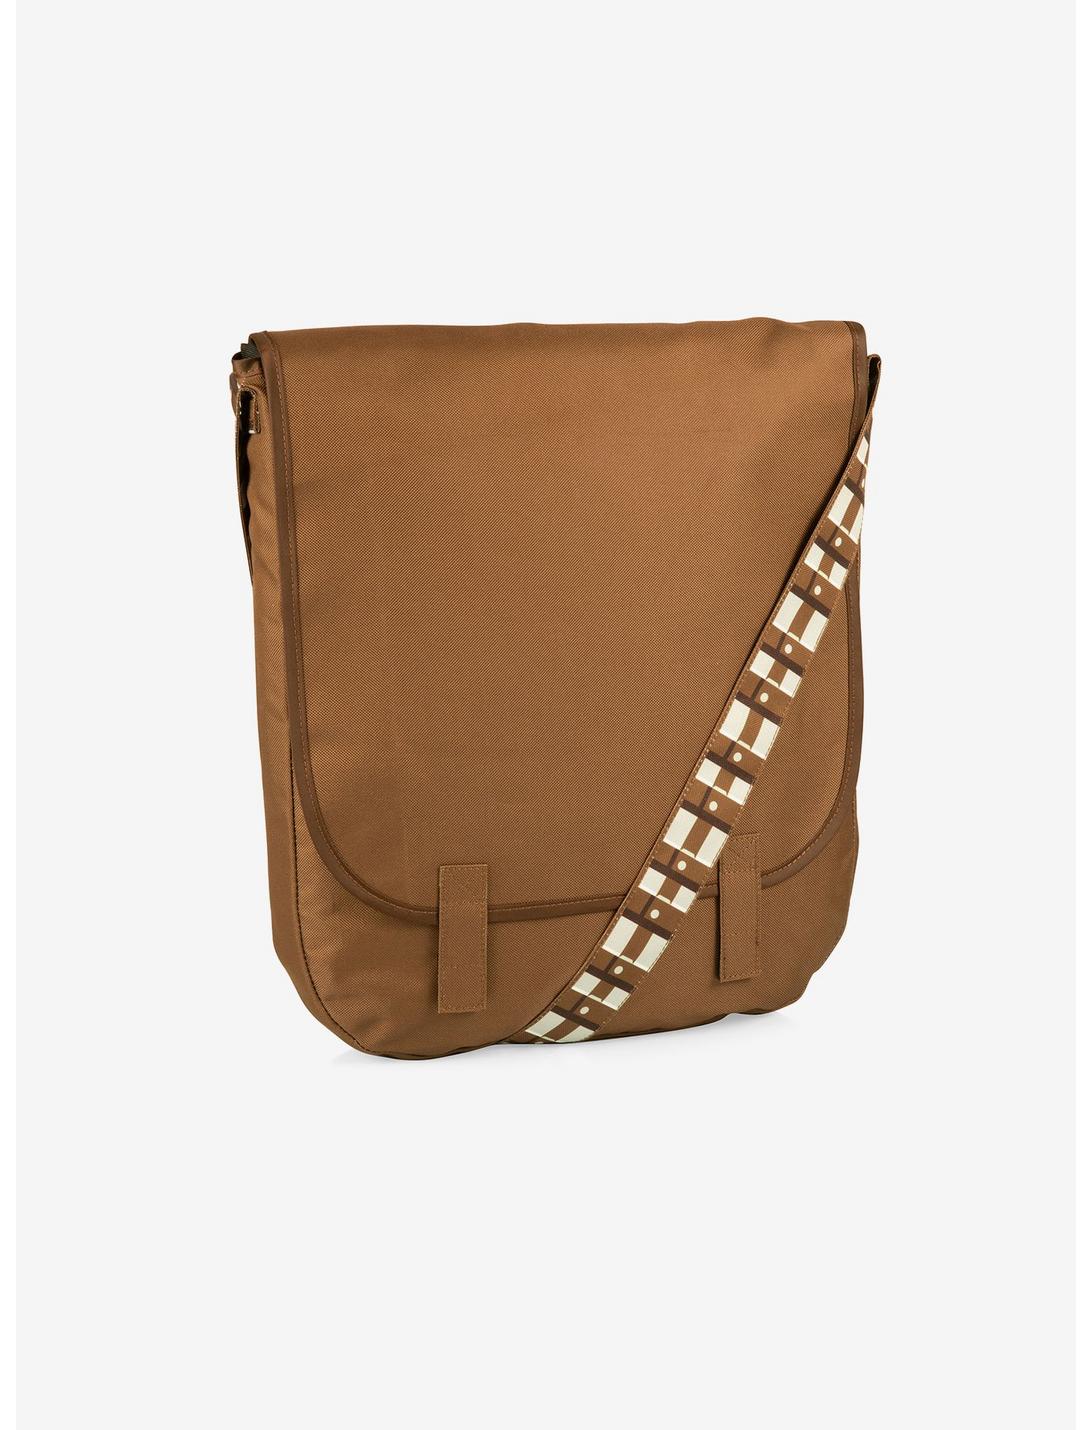 Star Wars Millennium Falcon Blanket in a Bag, , hi-res